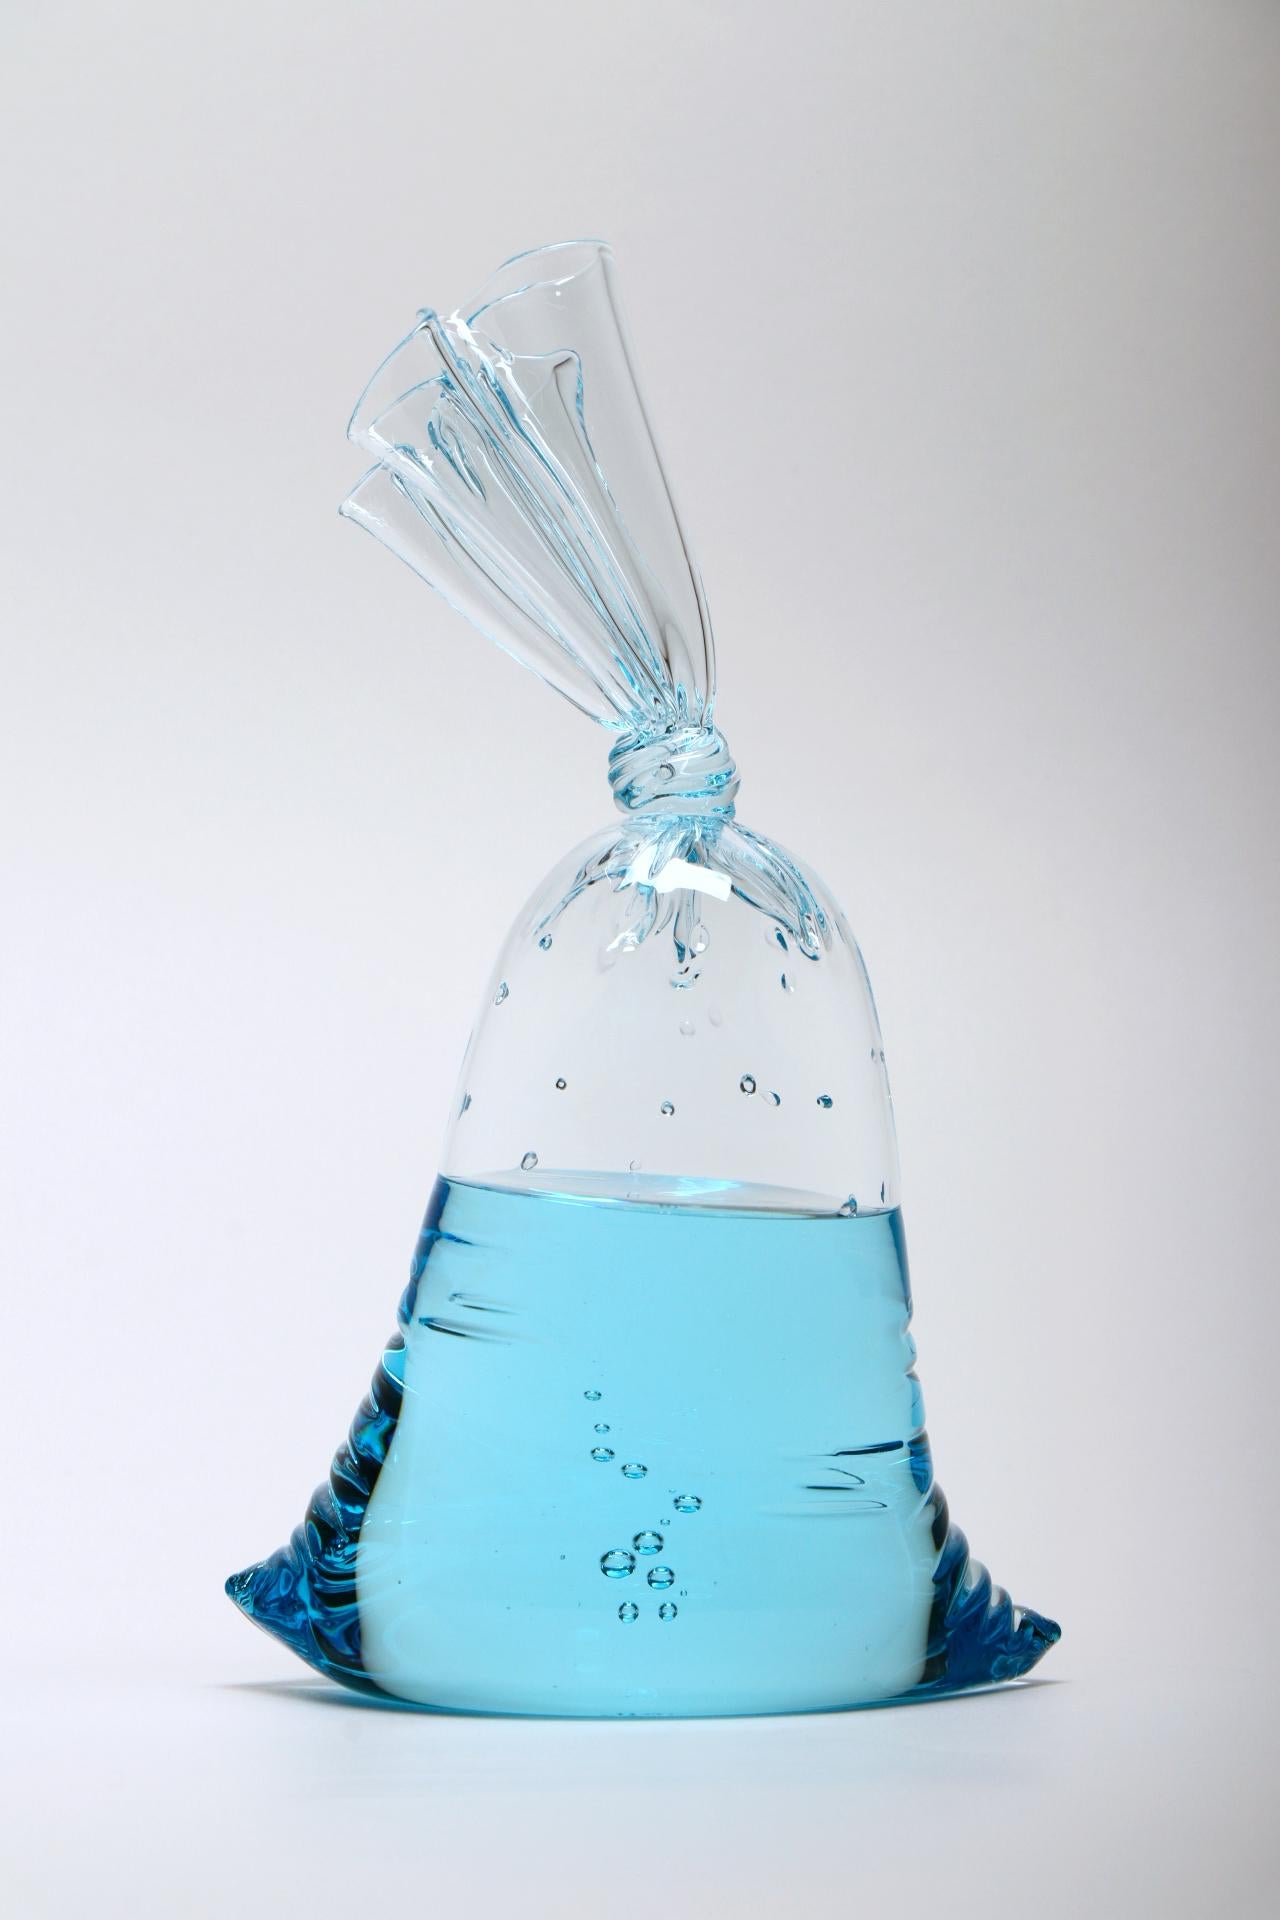 Dylan Martinez Abstract Sculpture - Small Blue Glass Water Bag - Hyperreal glass sculpture